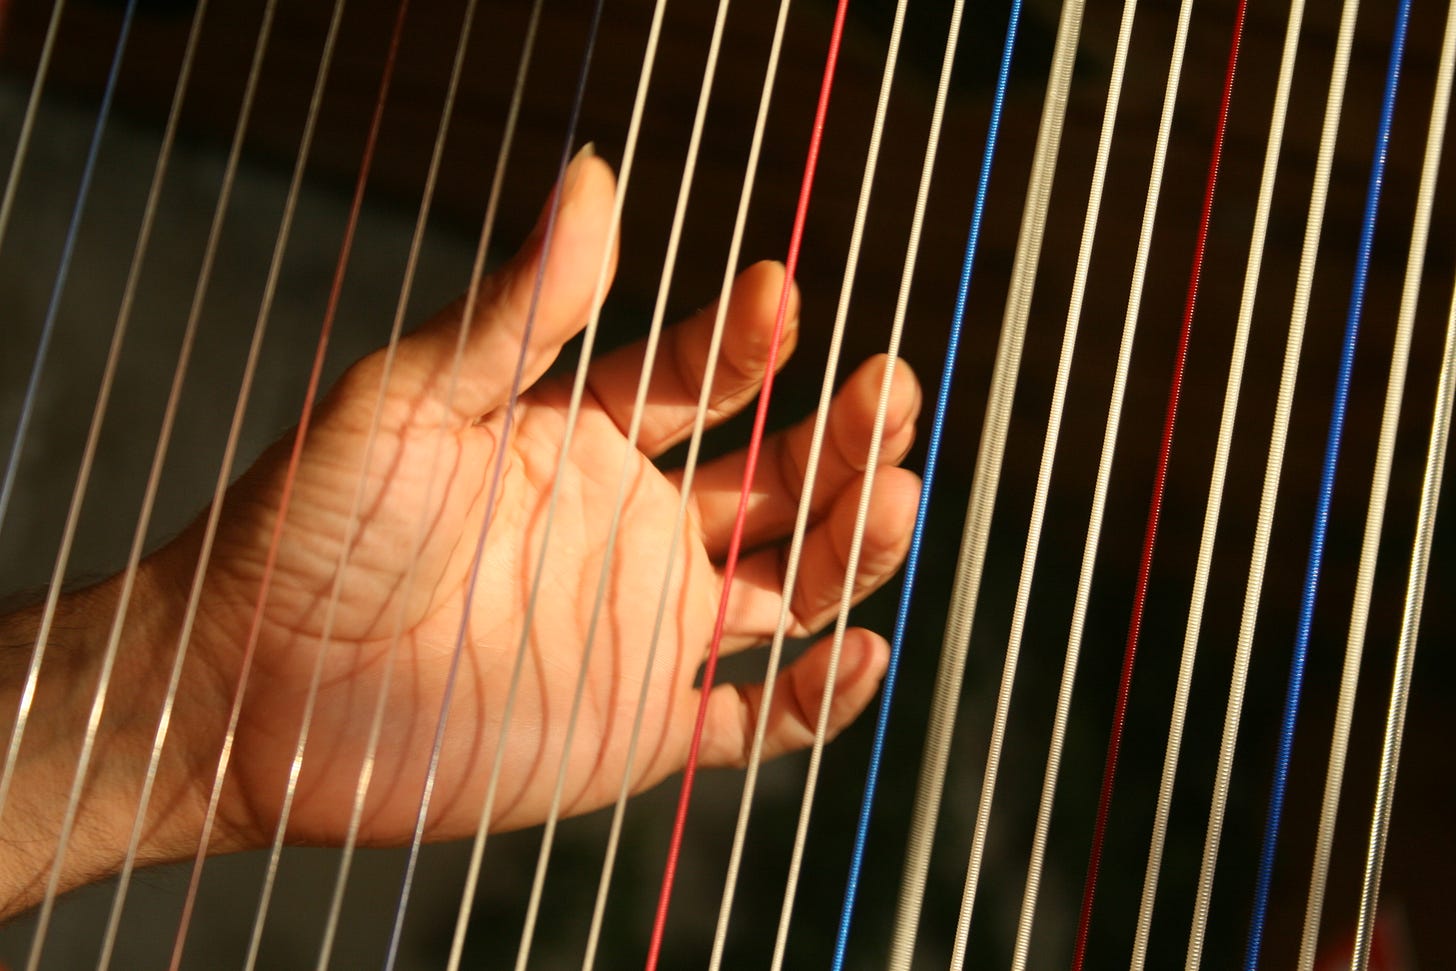 File:Harpist hands img 5000.jpg - Wikimedia Commons